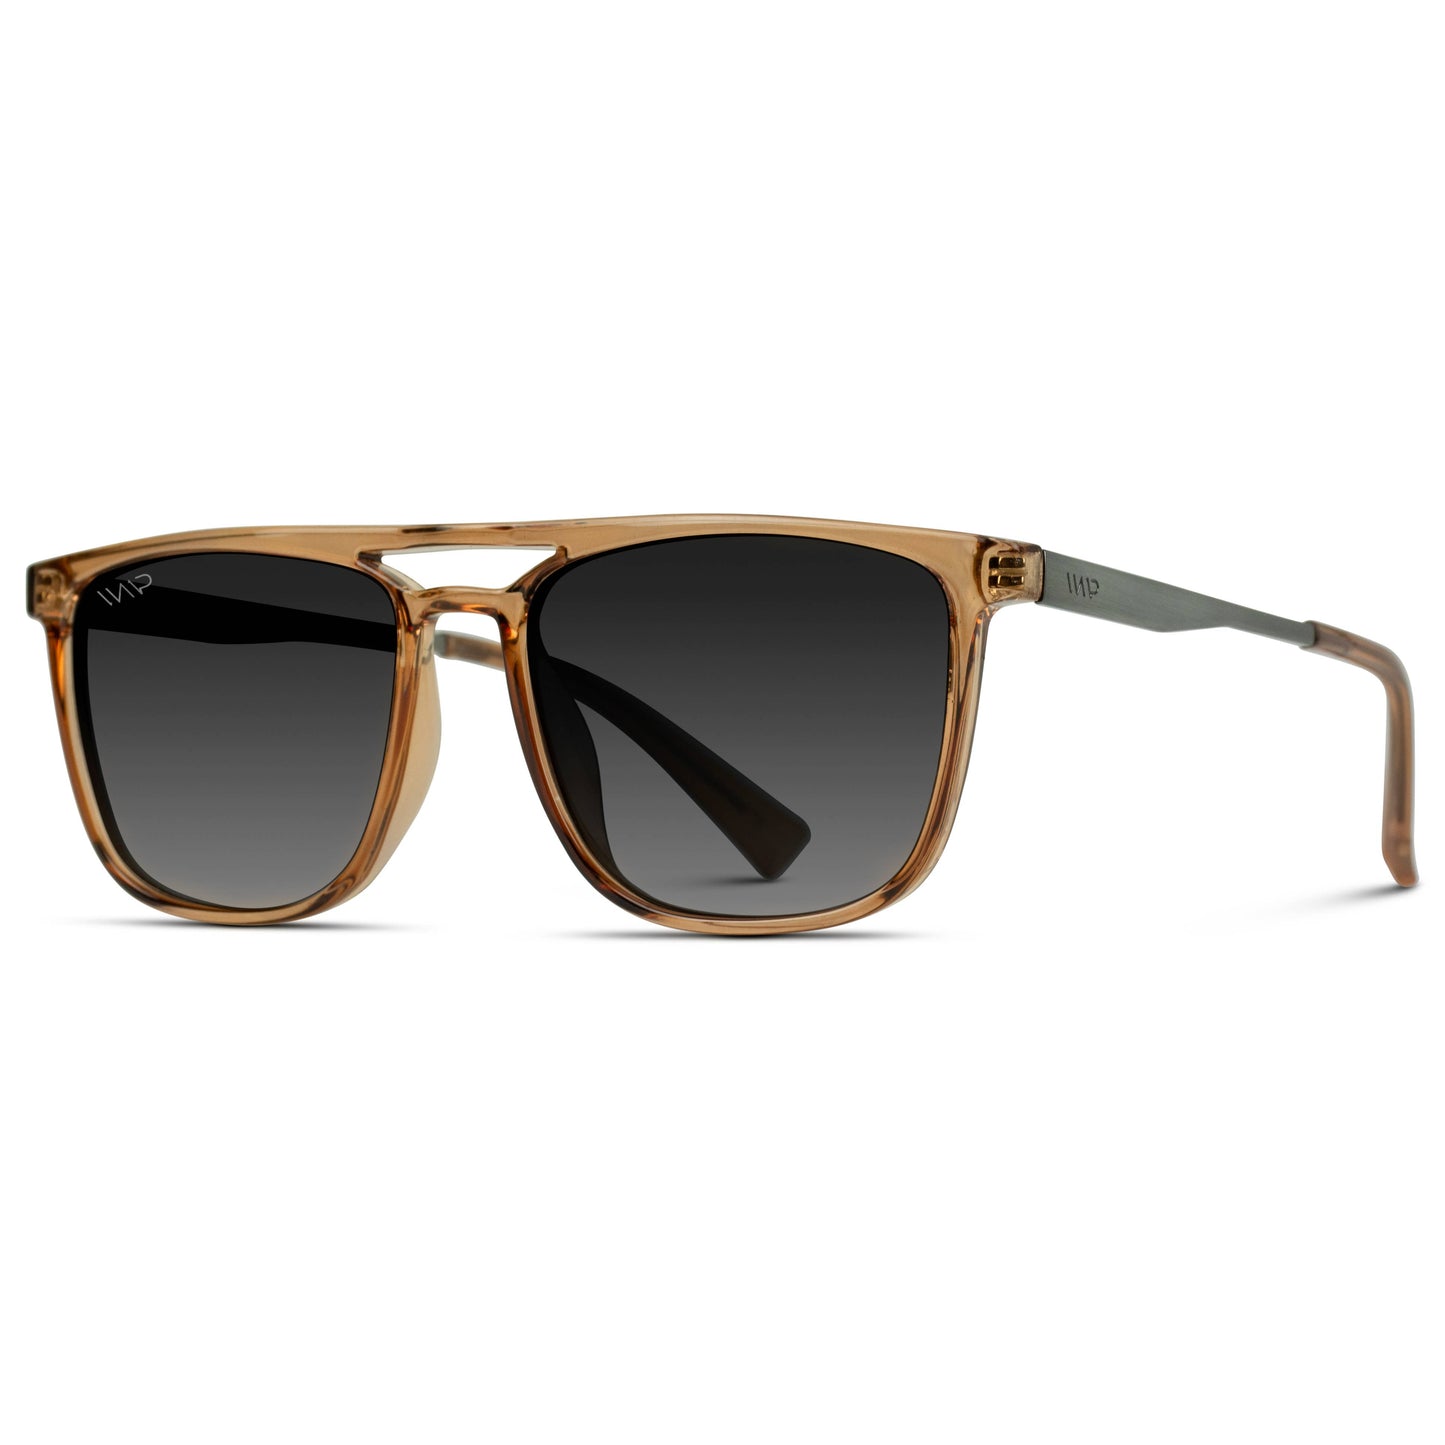 Lance - Premium Polarized Double Bar Sunglasses for Men | Crystal Brown / Black Gradient Lens